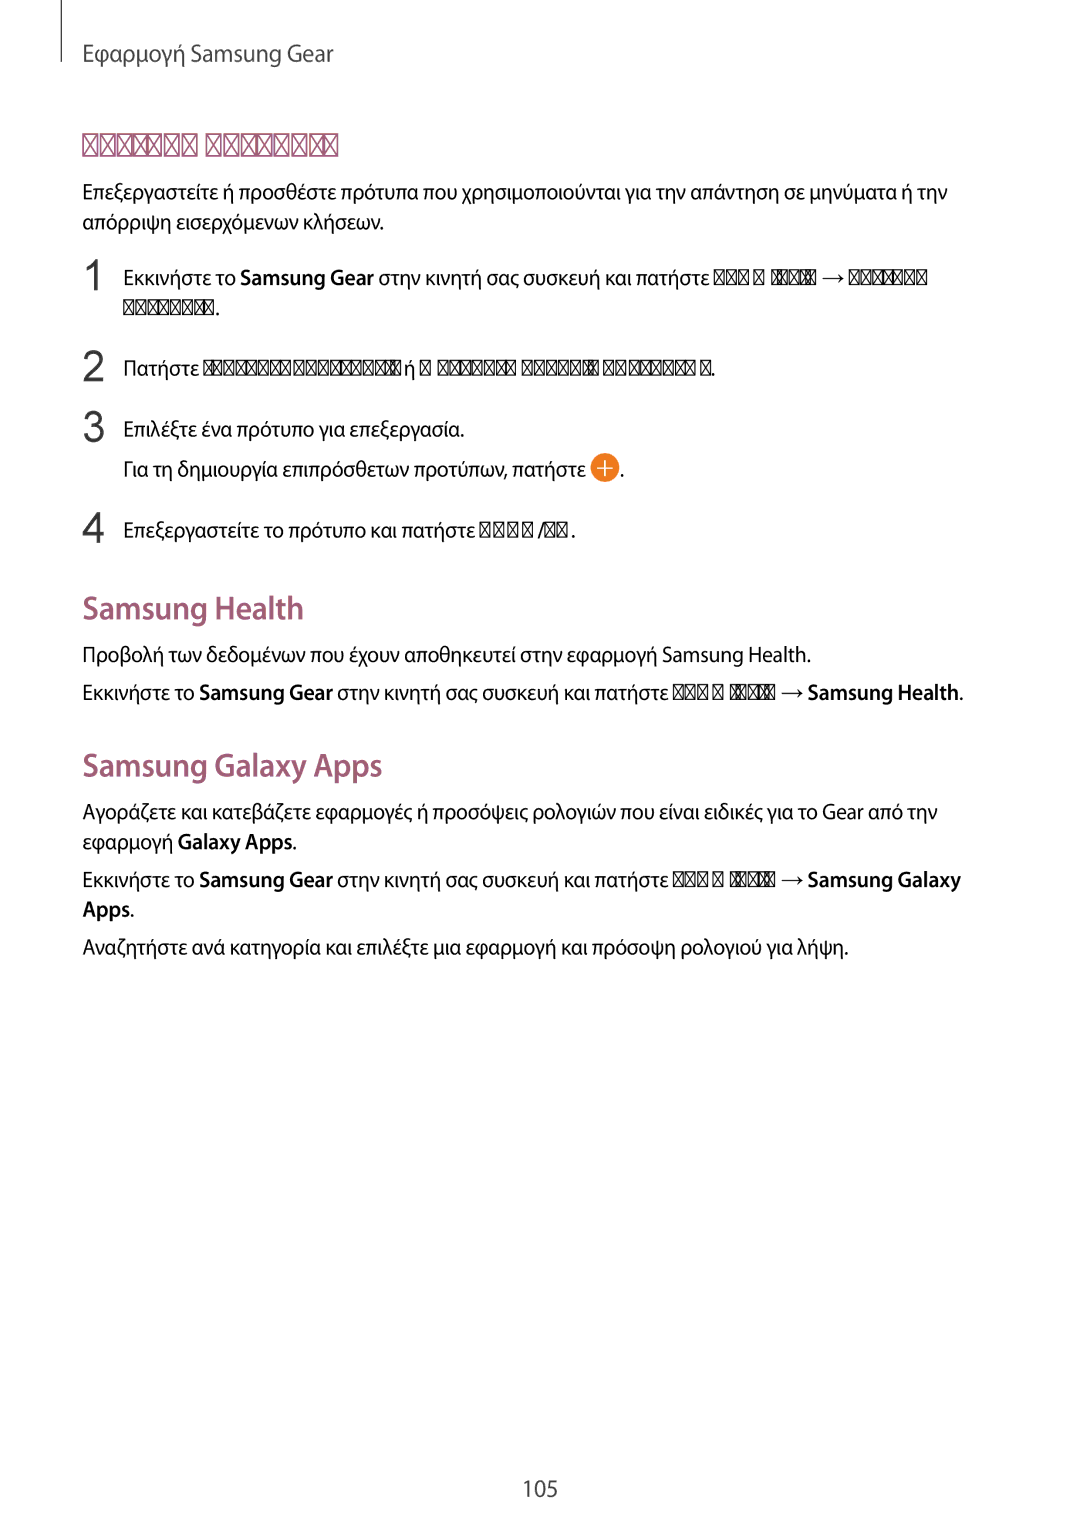 Samsung SM-R600NZBAEUR, SM-R600NZKAEUR manual Σύντομα μηνύματα, Samsung Health, Samsung Galaxy Apps 